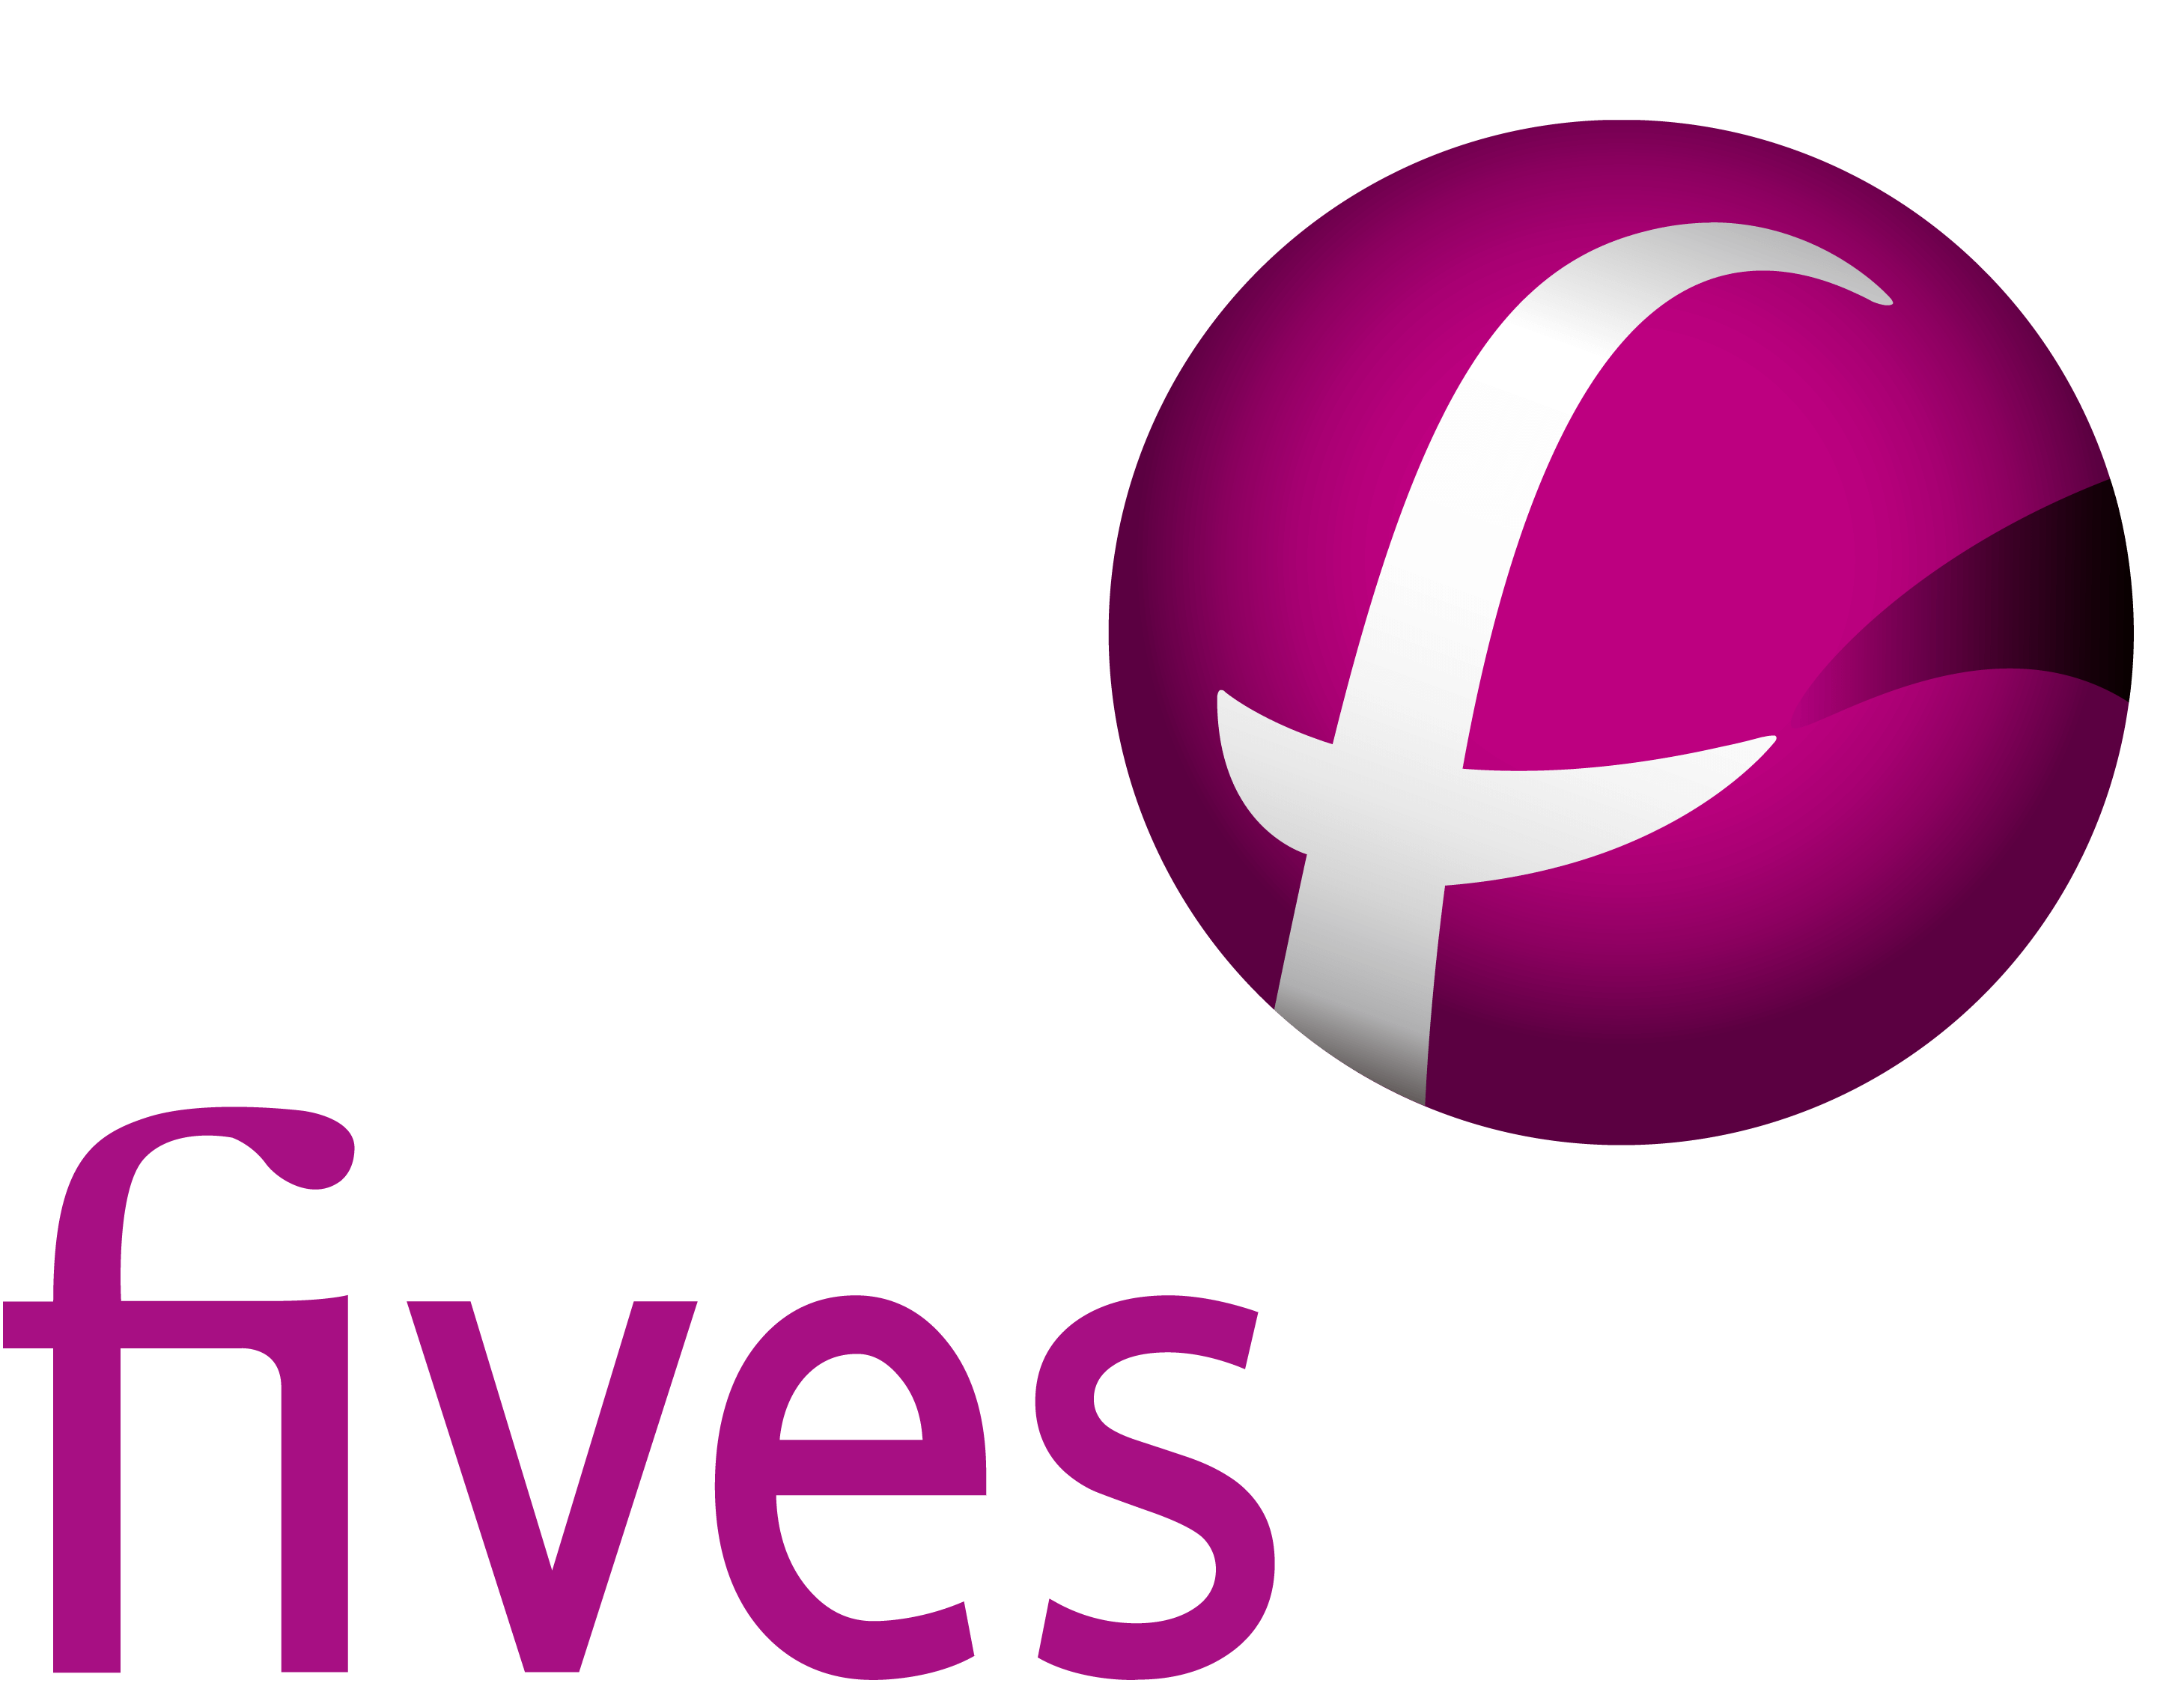 fives-group-logo.png